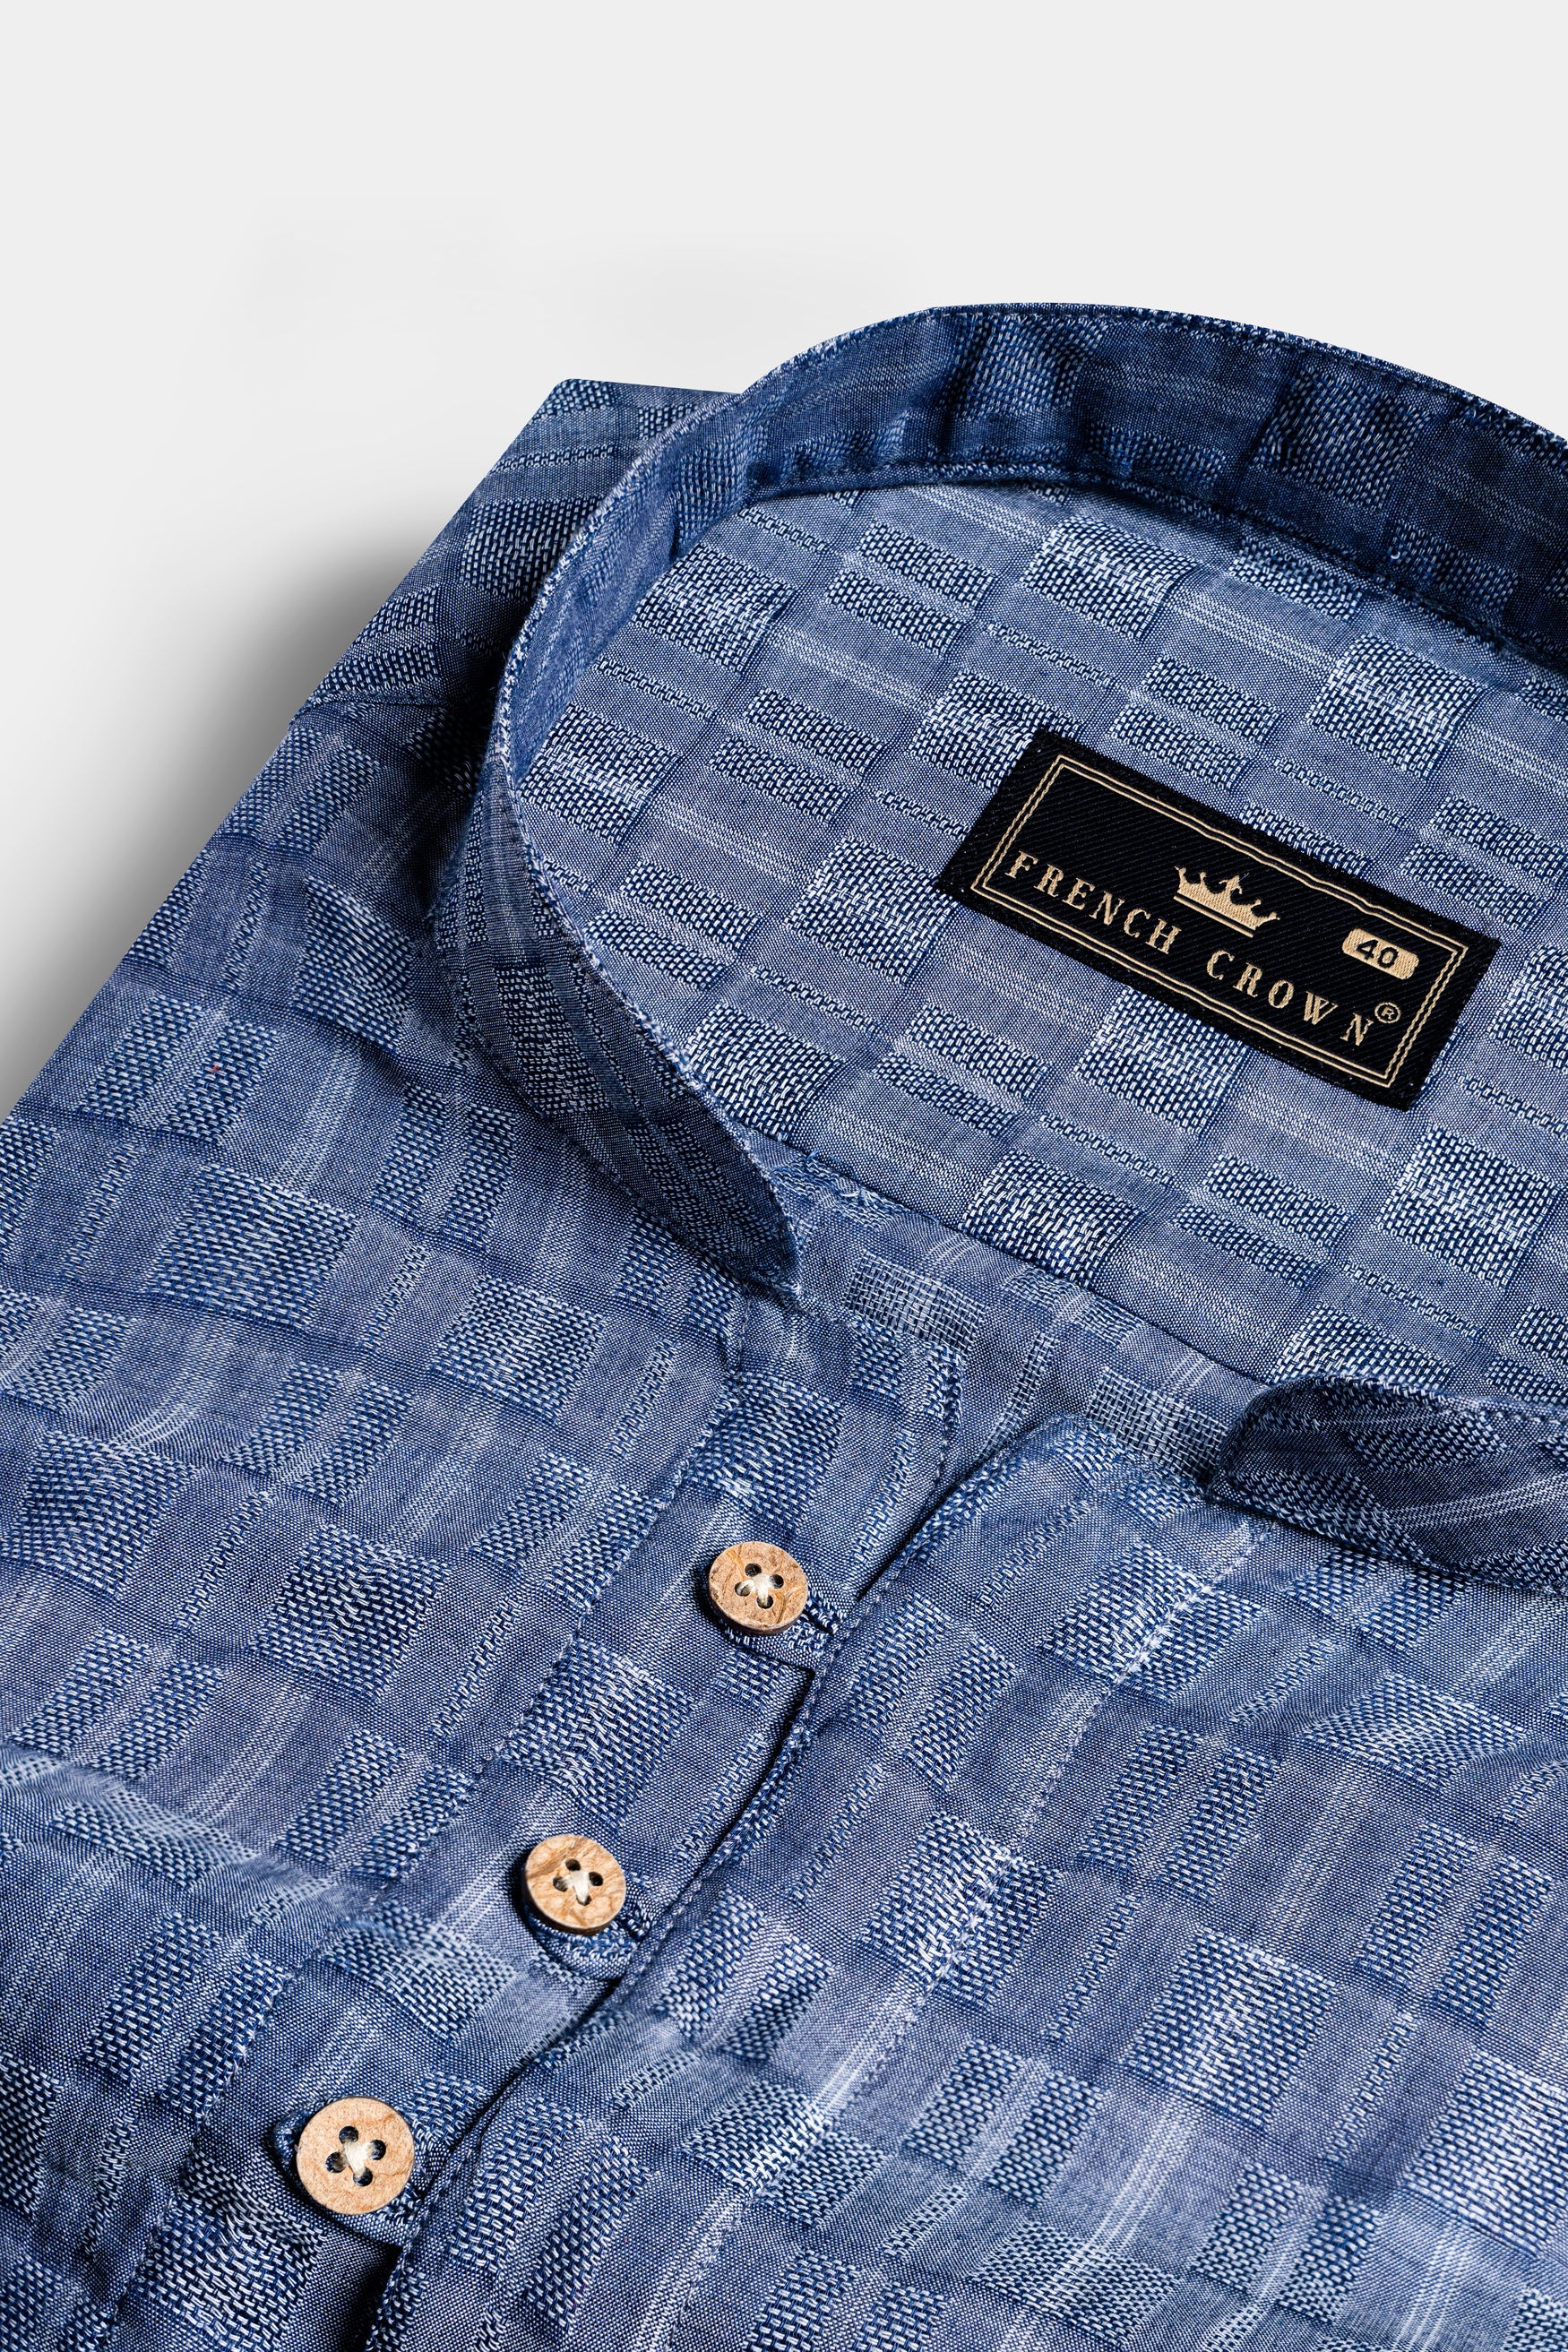 Waikawa Blue and Casper Gray Dobby Textured Premium Giza Cotton Kurta Shirt